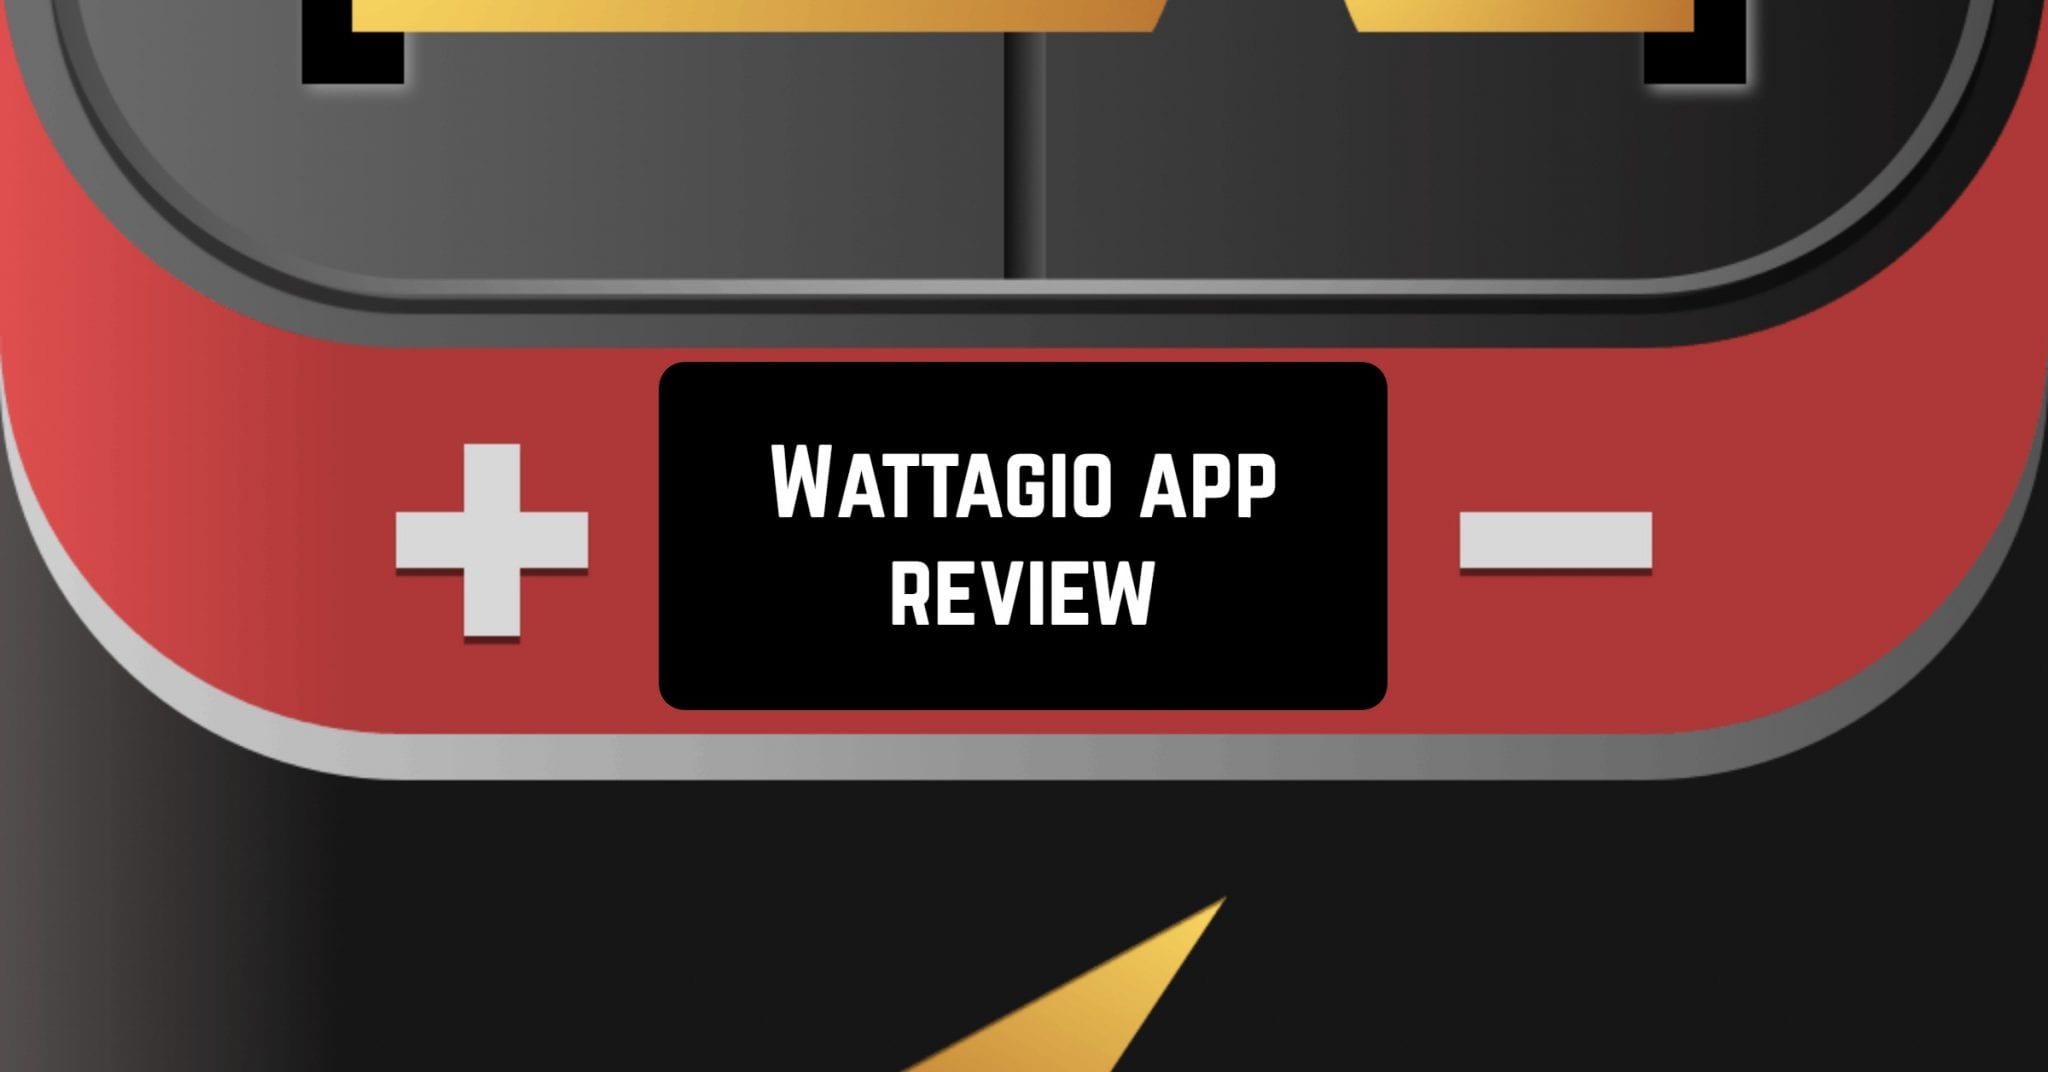 Wattagio download the new version for windows